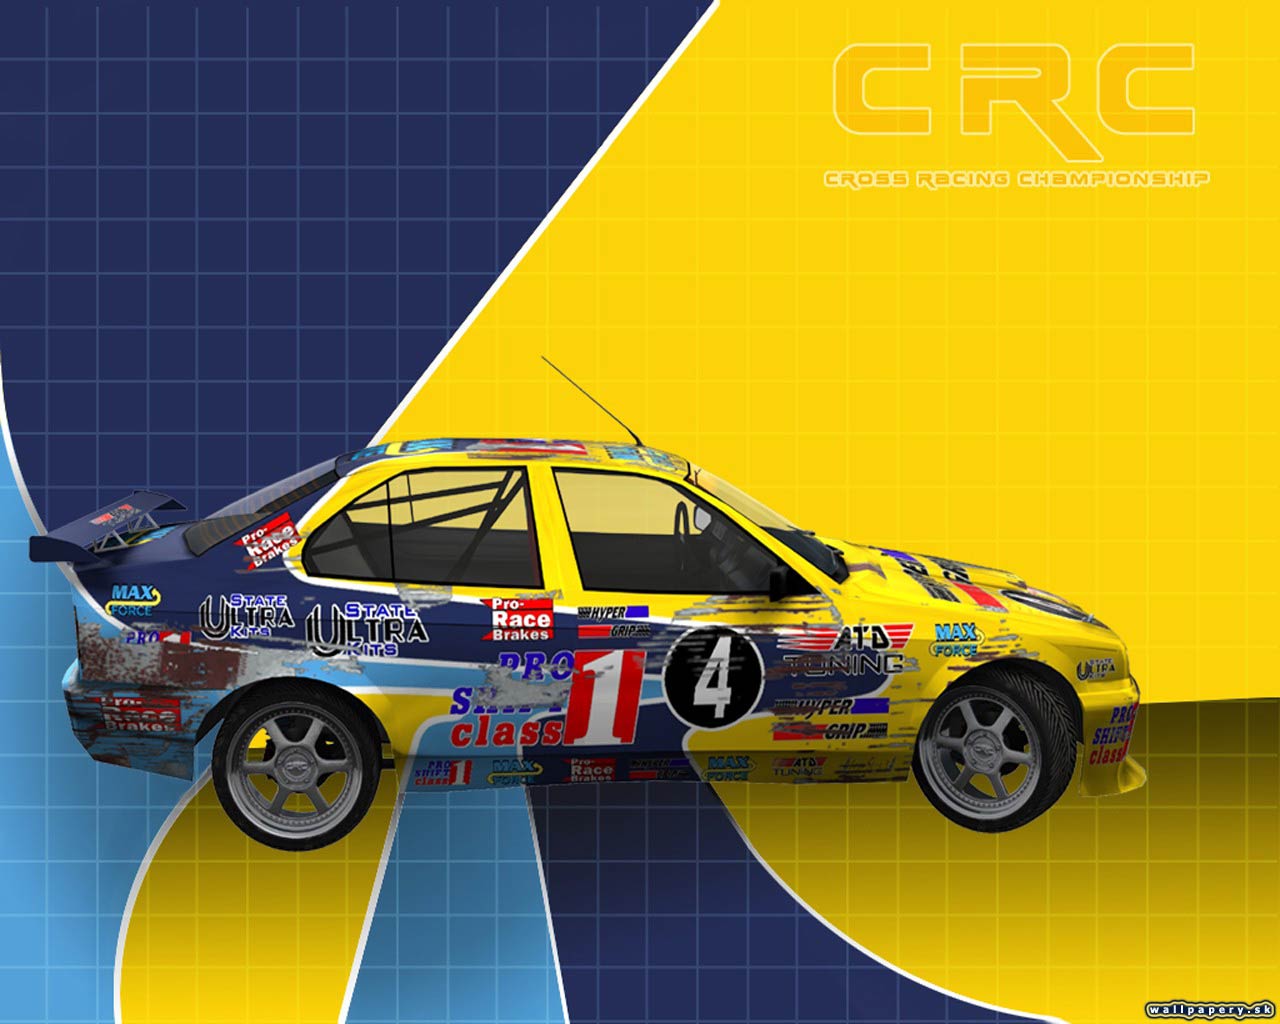 Cross Racing Championship 2005 - wallpaper 21